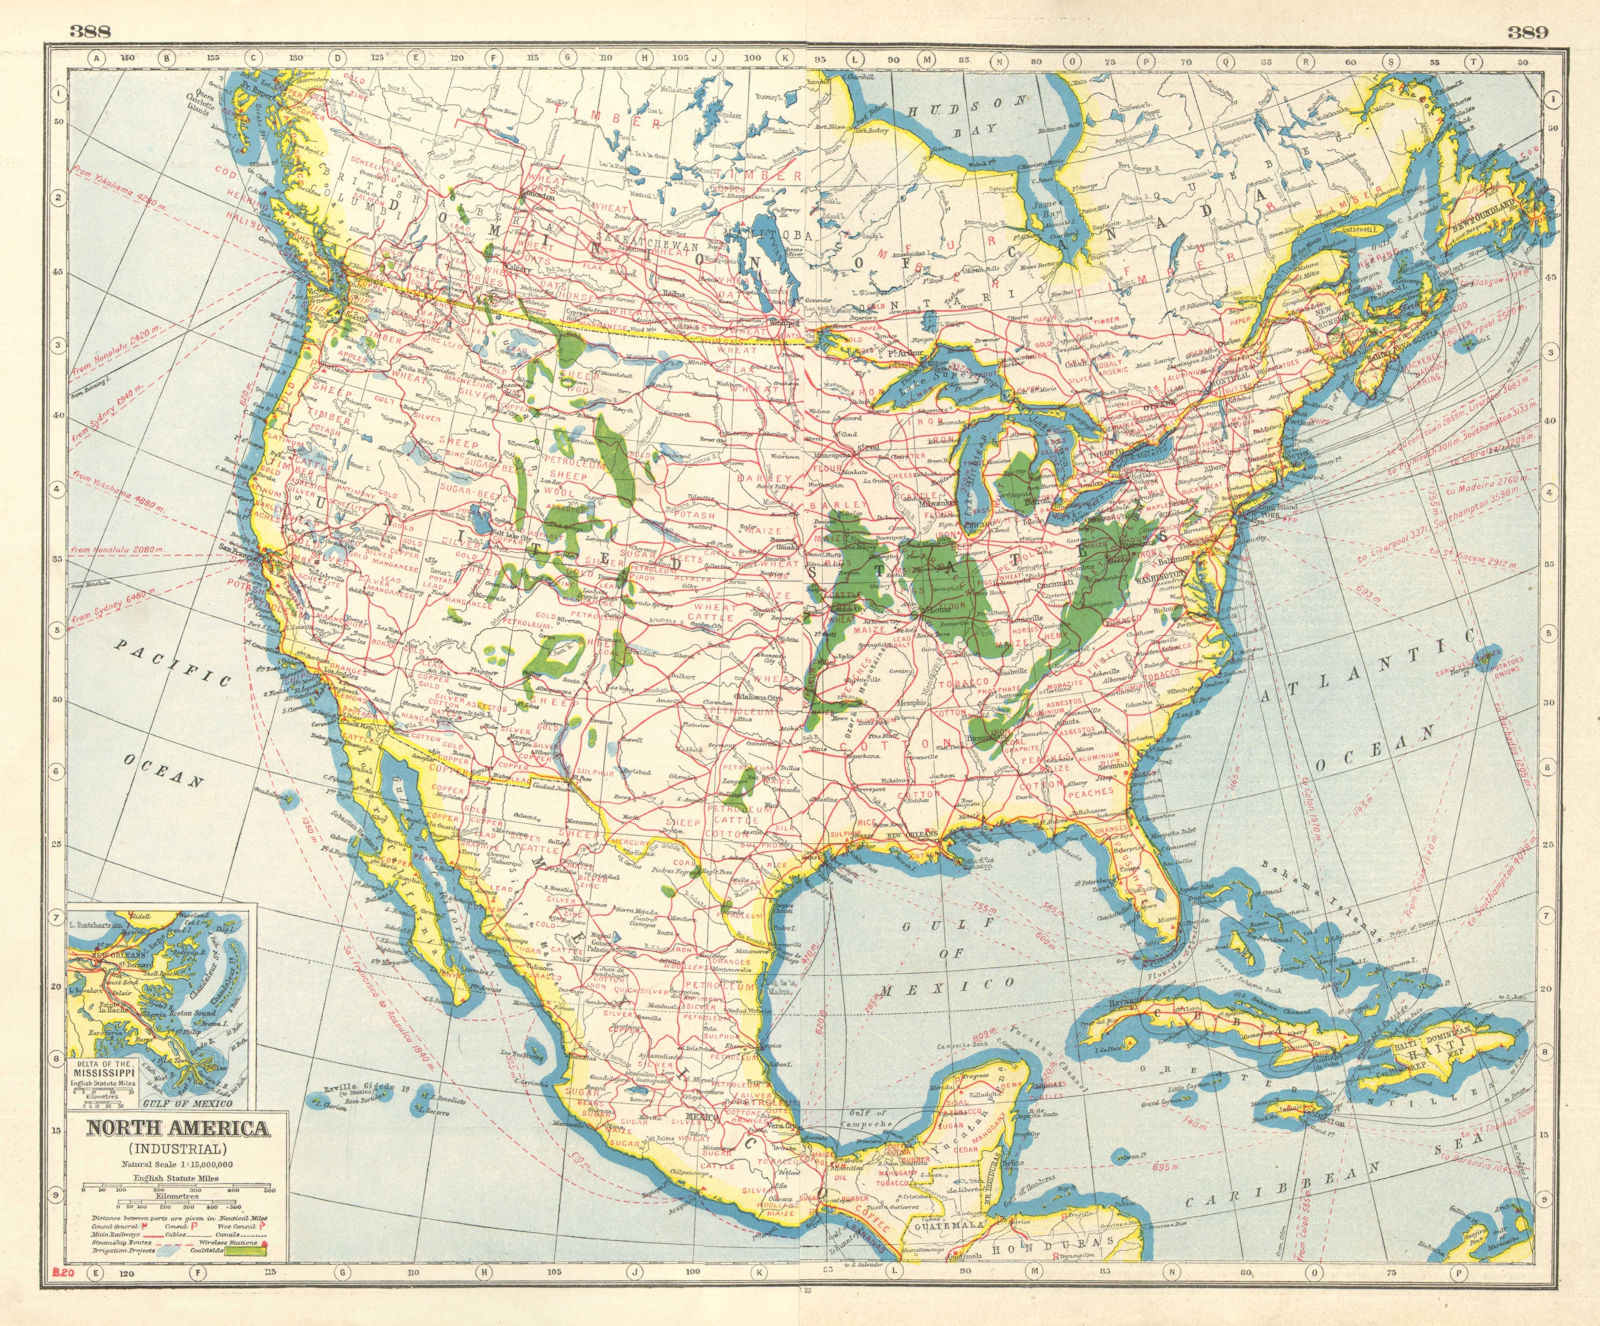 NORTH AMERICA INDUSTRIES. USA Canada. Coalfields Irrigation Railroads 1920 map